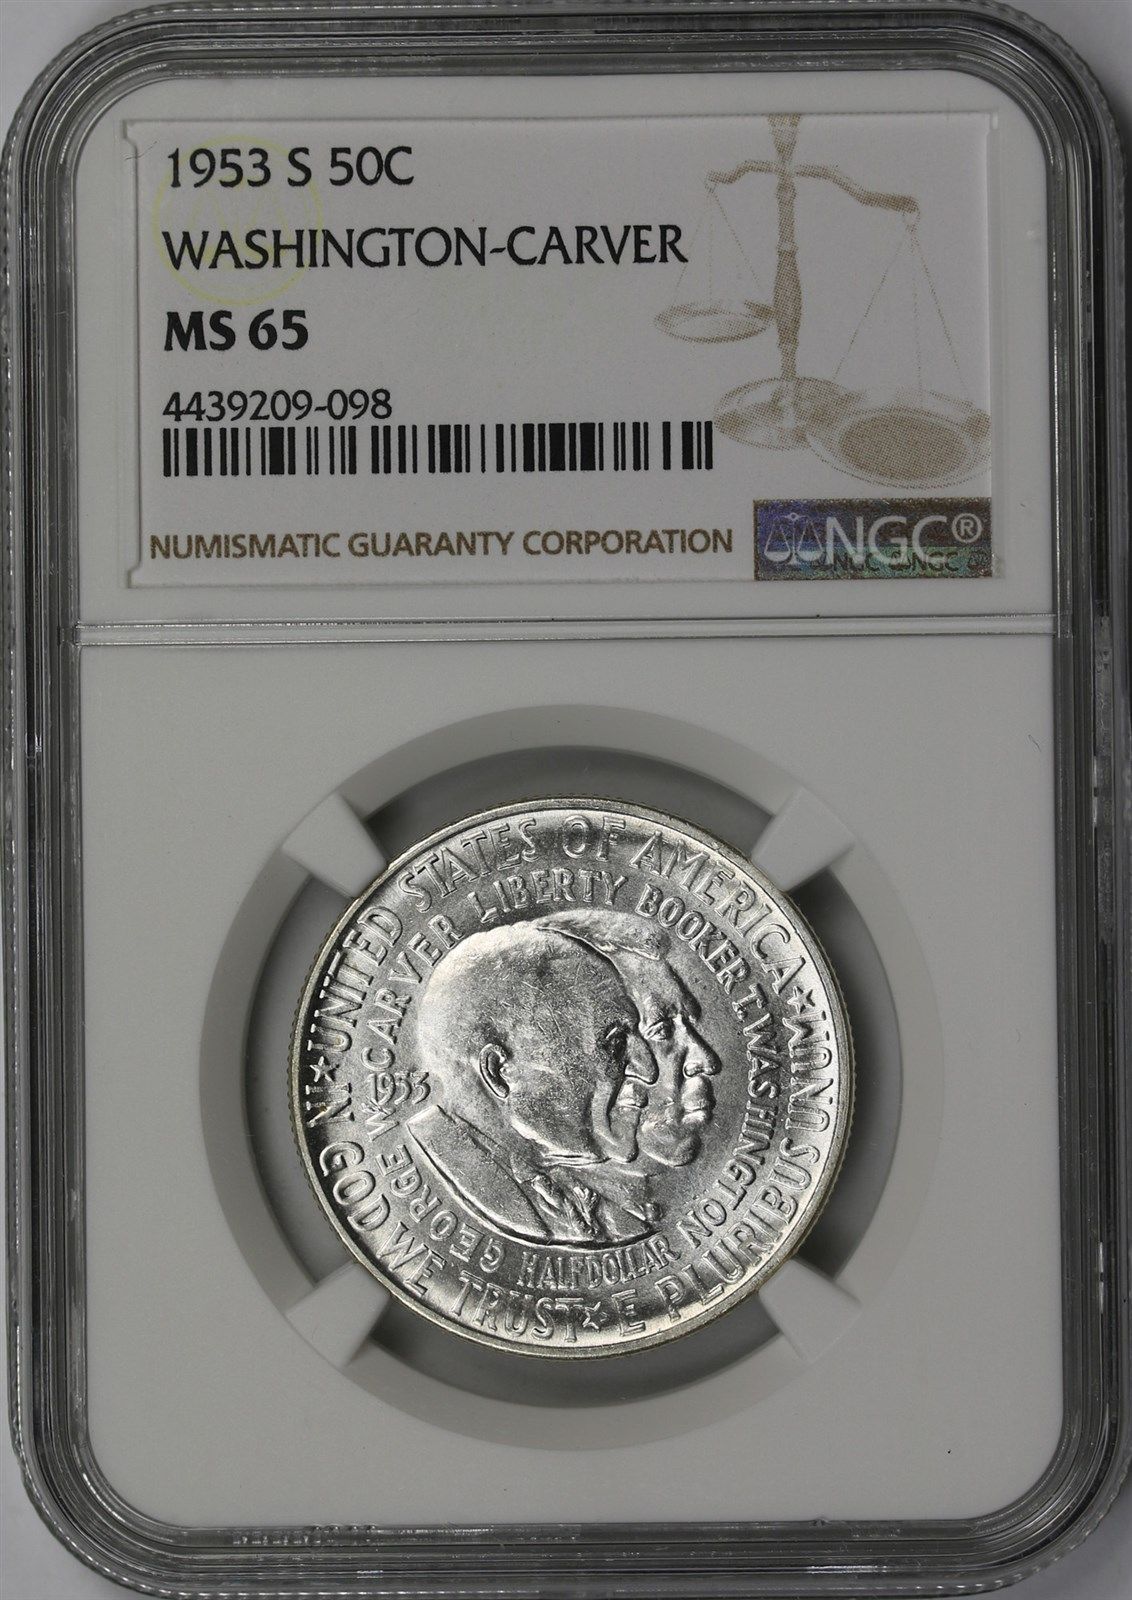 1953-S Washington-Carver 50C NGC MS 65 ~ Early Silver Commemorative Half Dollar